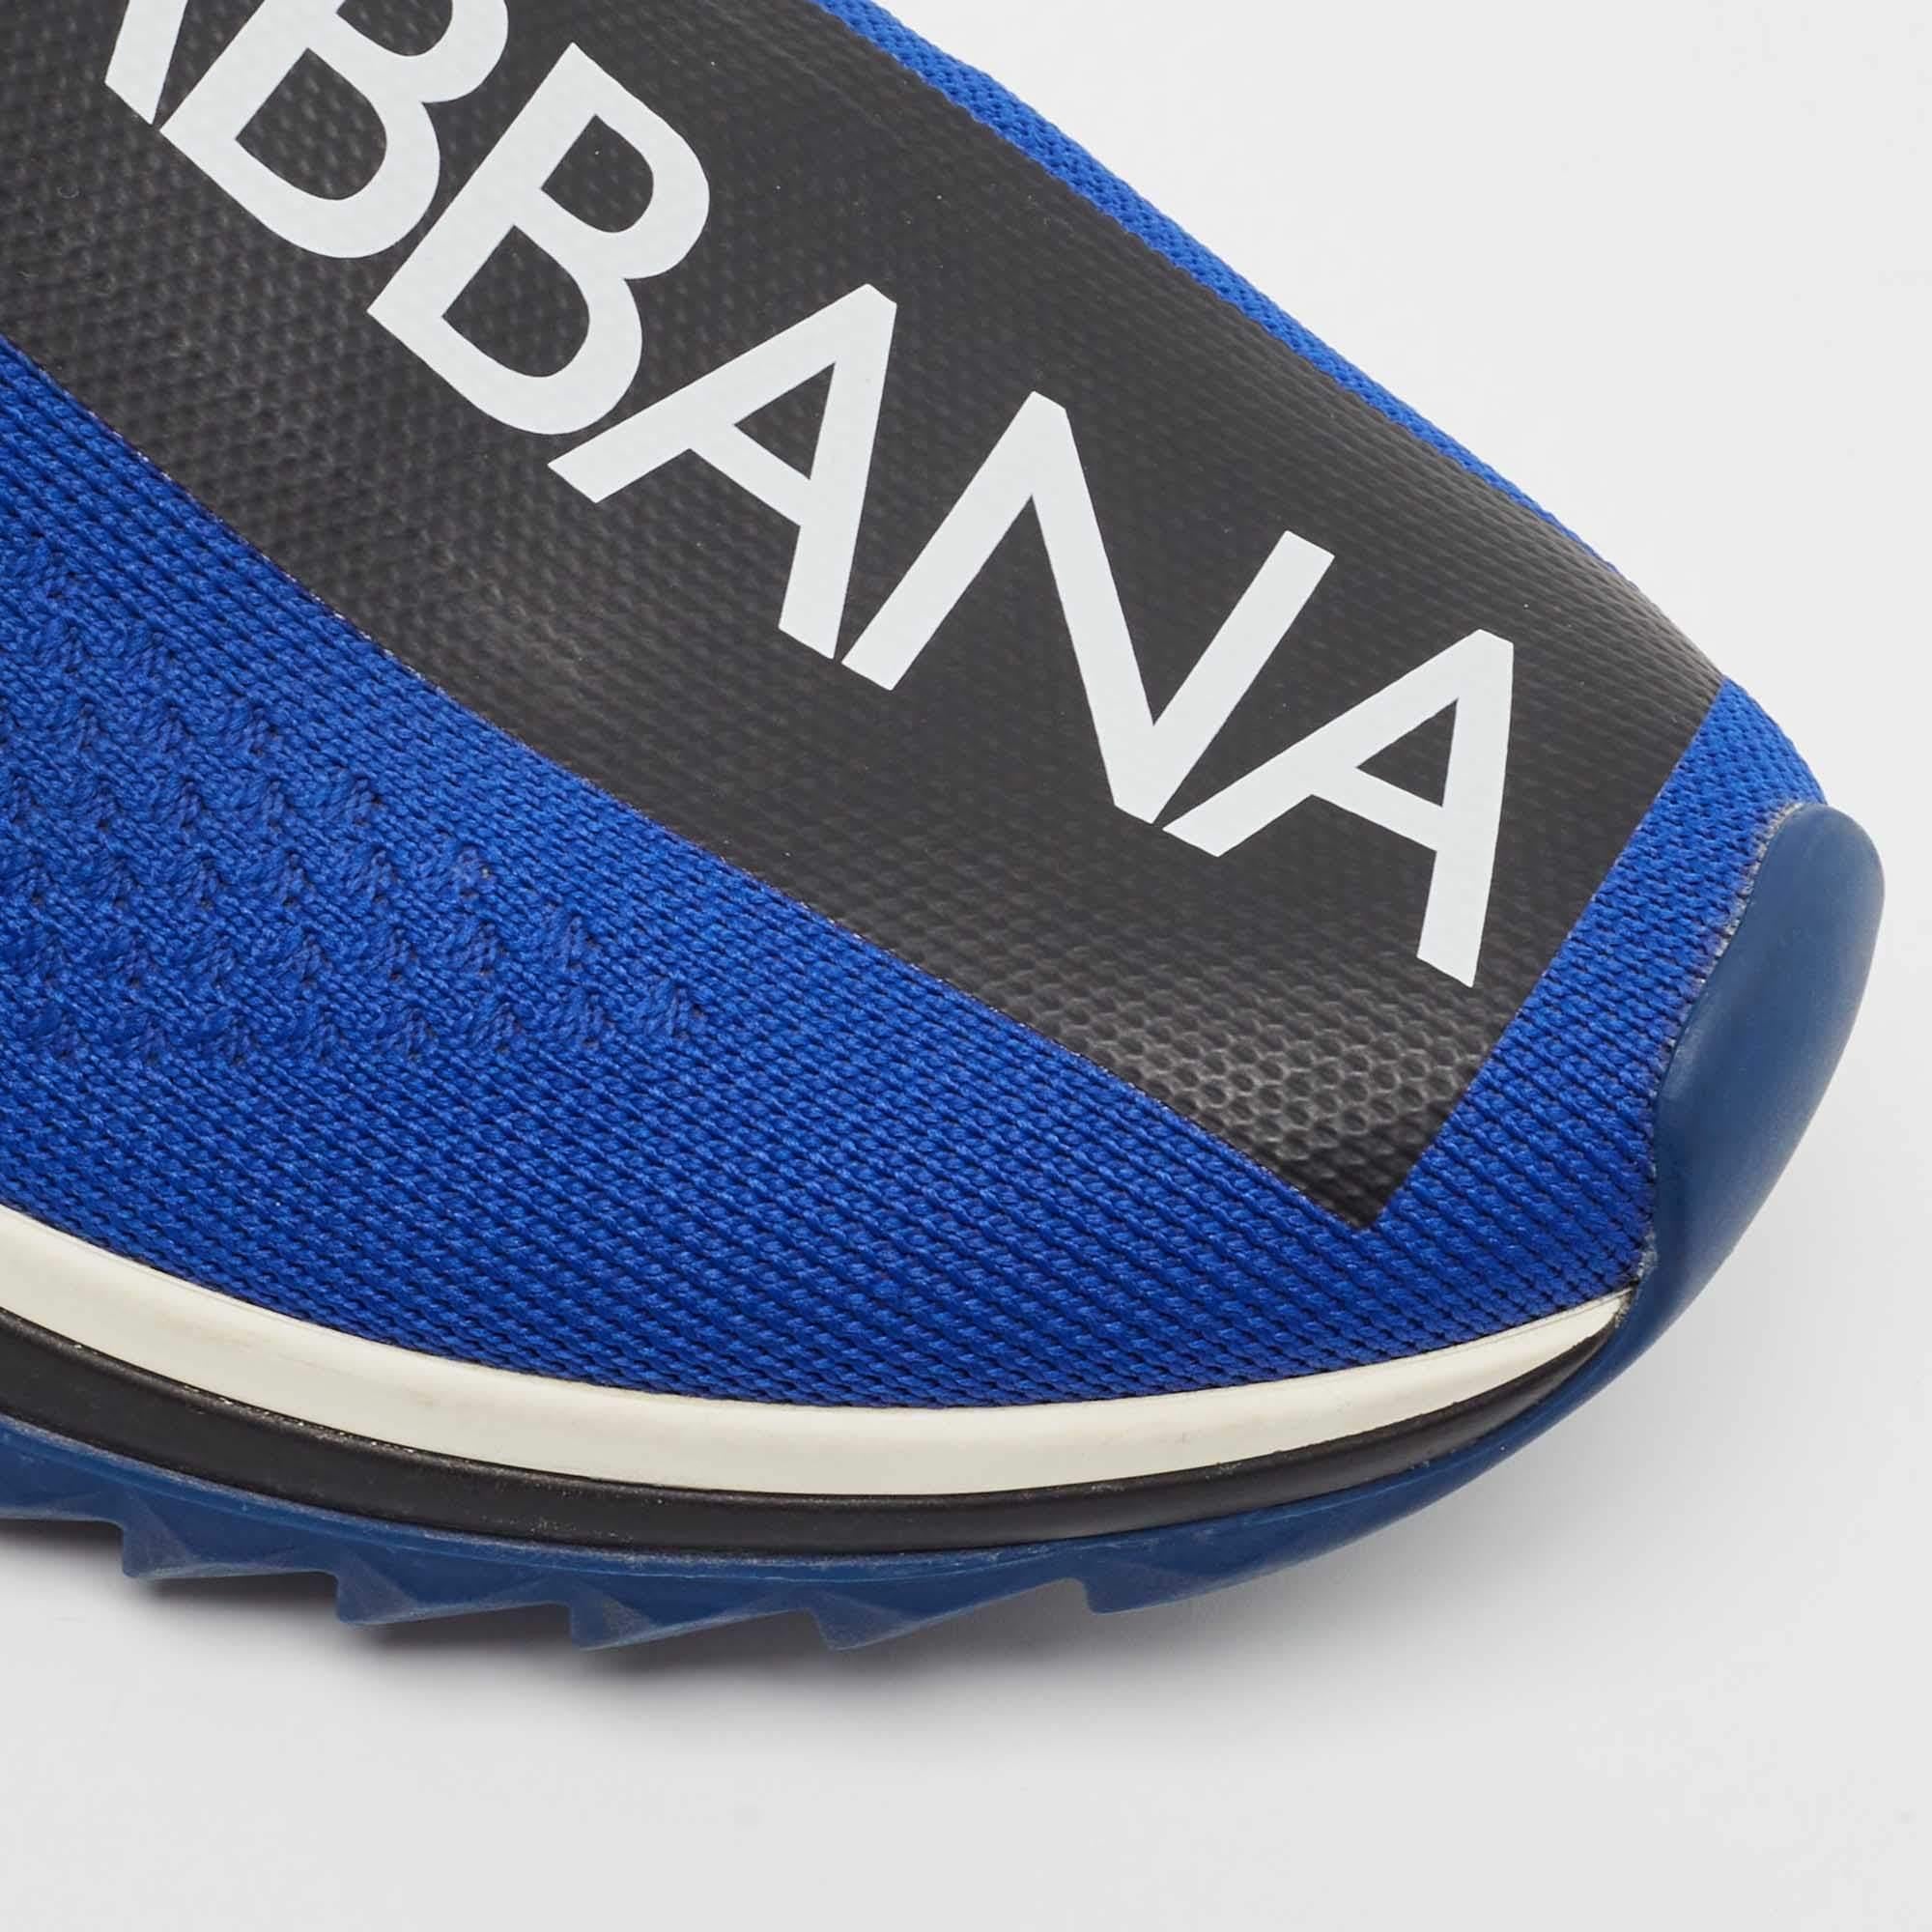 Dolce & Gabbana Blue/Black Knit Fabric Sorrento Sneakers Size 39 4